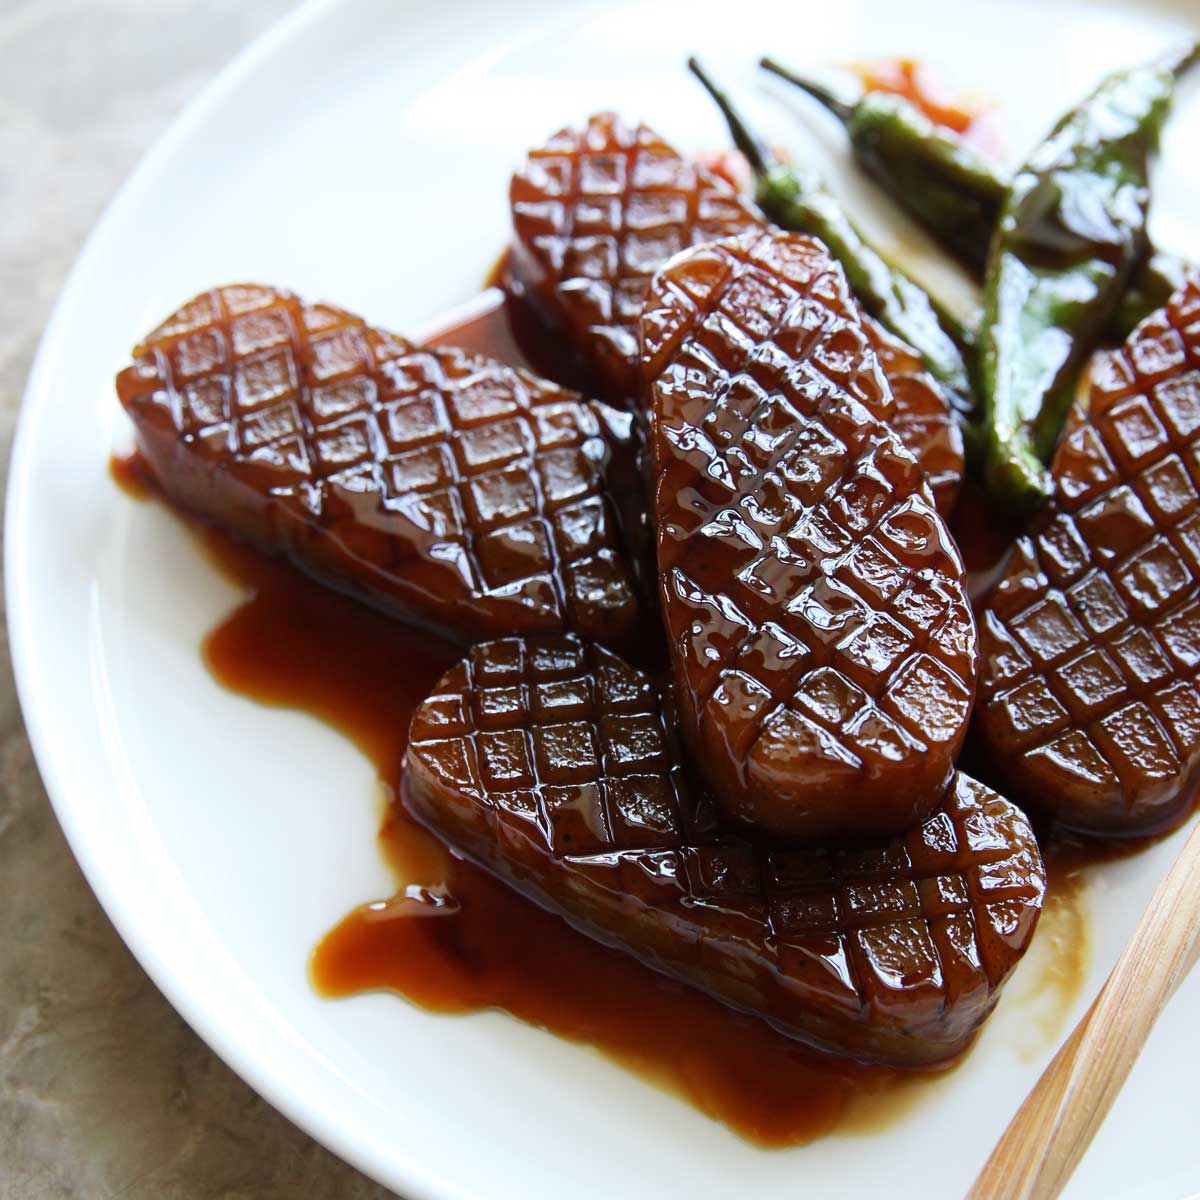 Easy 10-Minute Konjac (Konnyaku) Steak Recipe - Vegan & Low Carb! - Strawberry Japanese Roll Cake